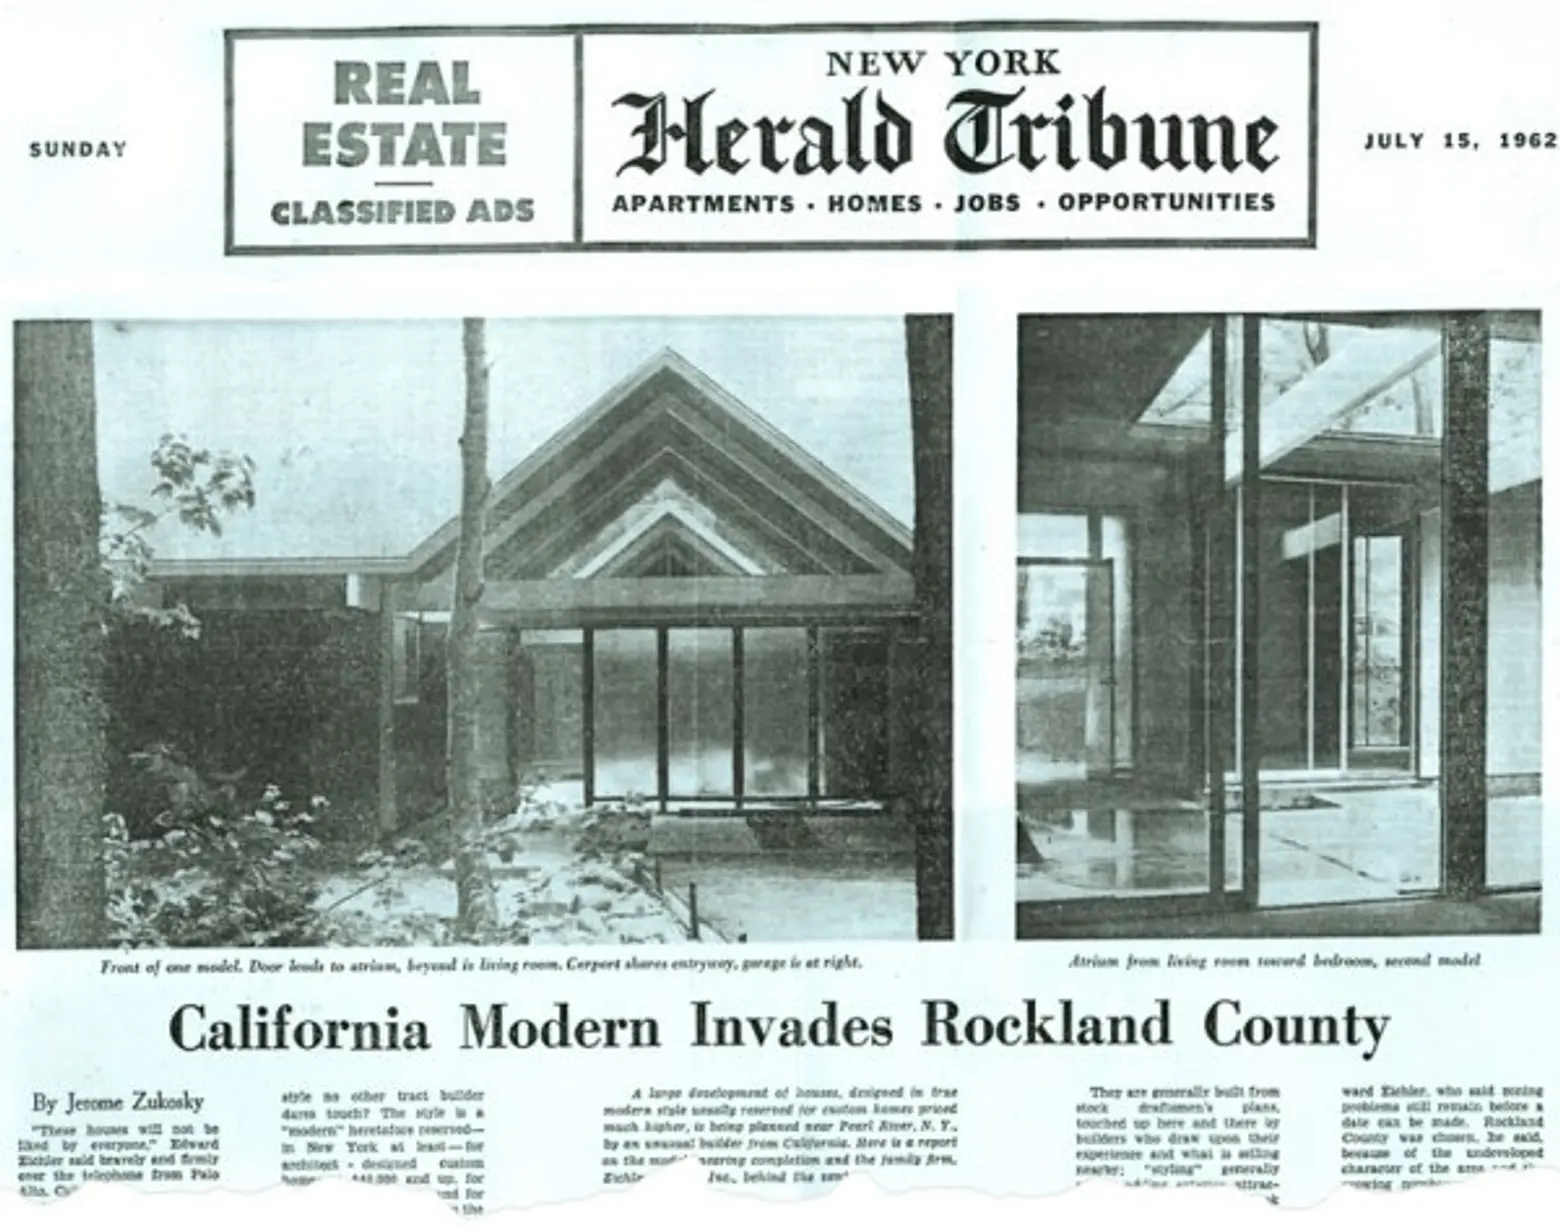 Eichler, East Coast Eichlers, Modernist Architecture, Modern House, Mid-century Modern, 130 Grotke Road, Herald Tribune Headline